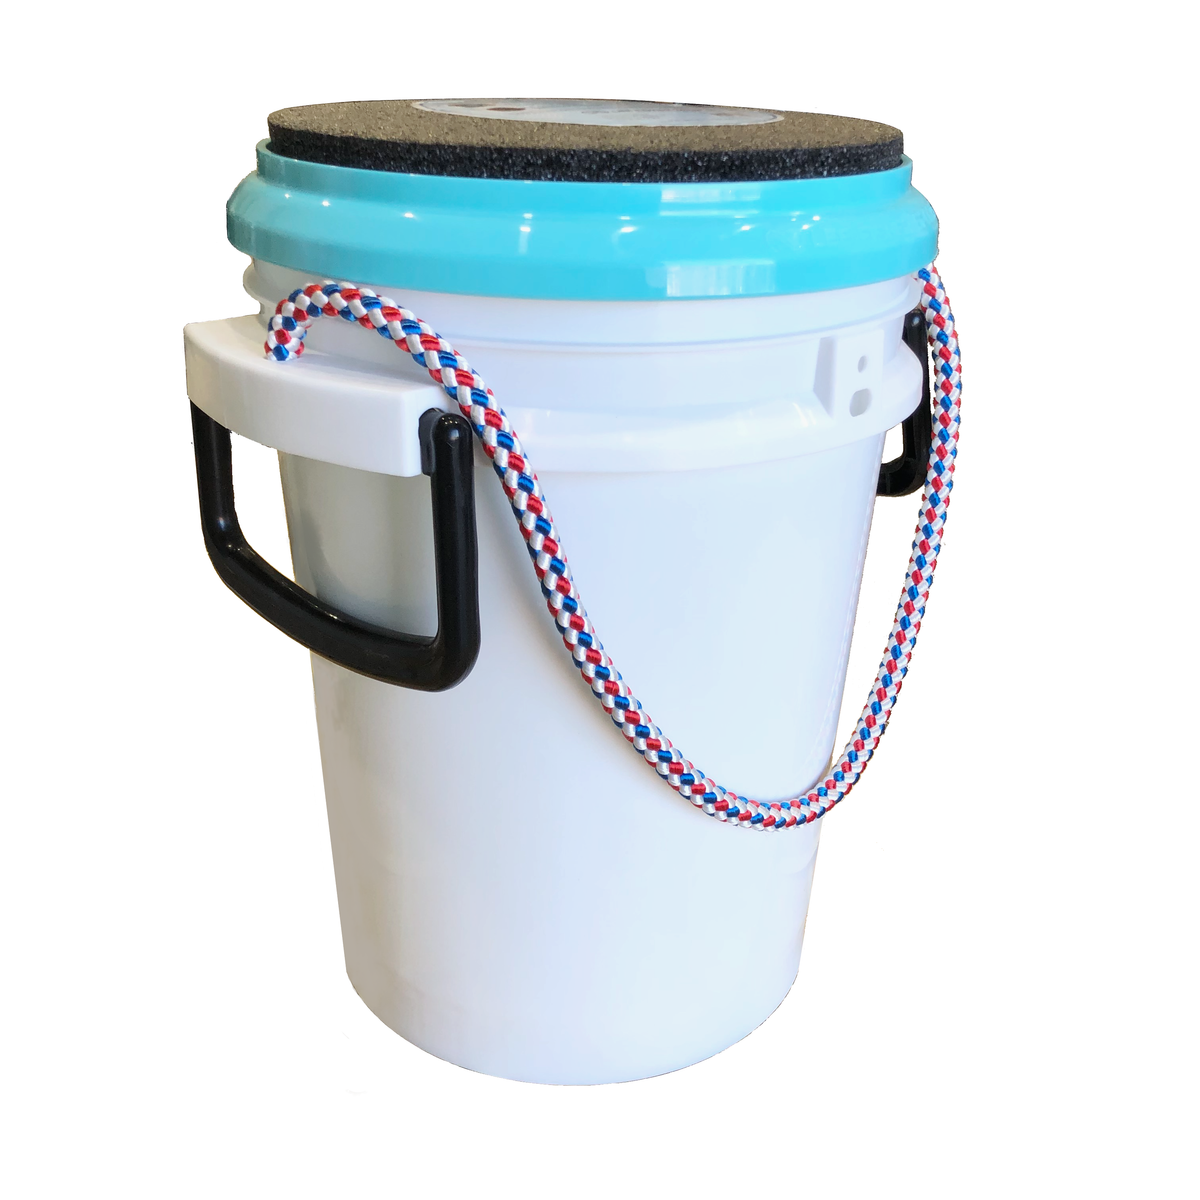 Padded Thick Foam Bucket Seat with 5 Gallon Bucket - Aqua Blue